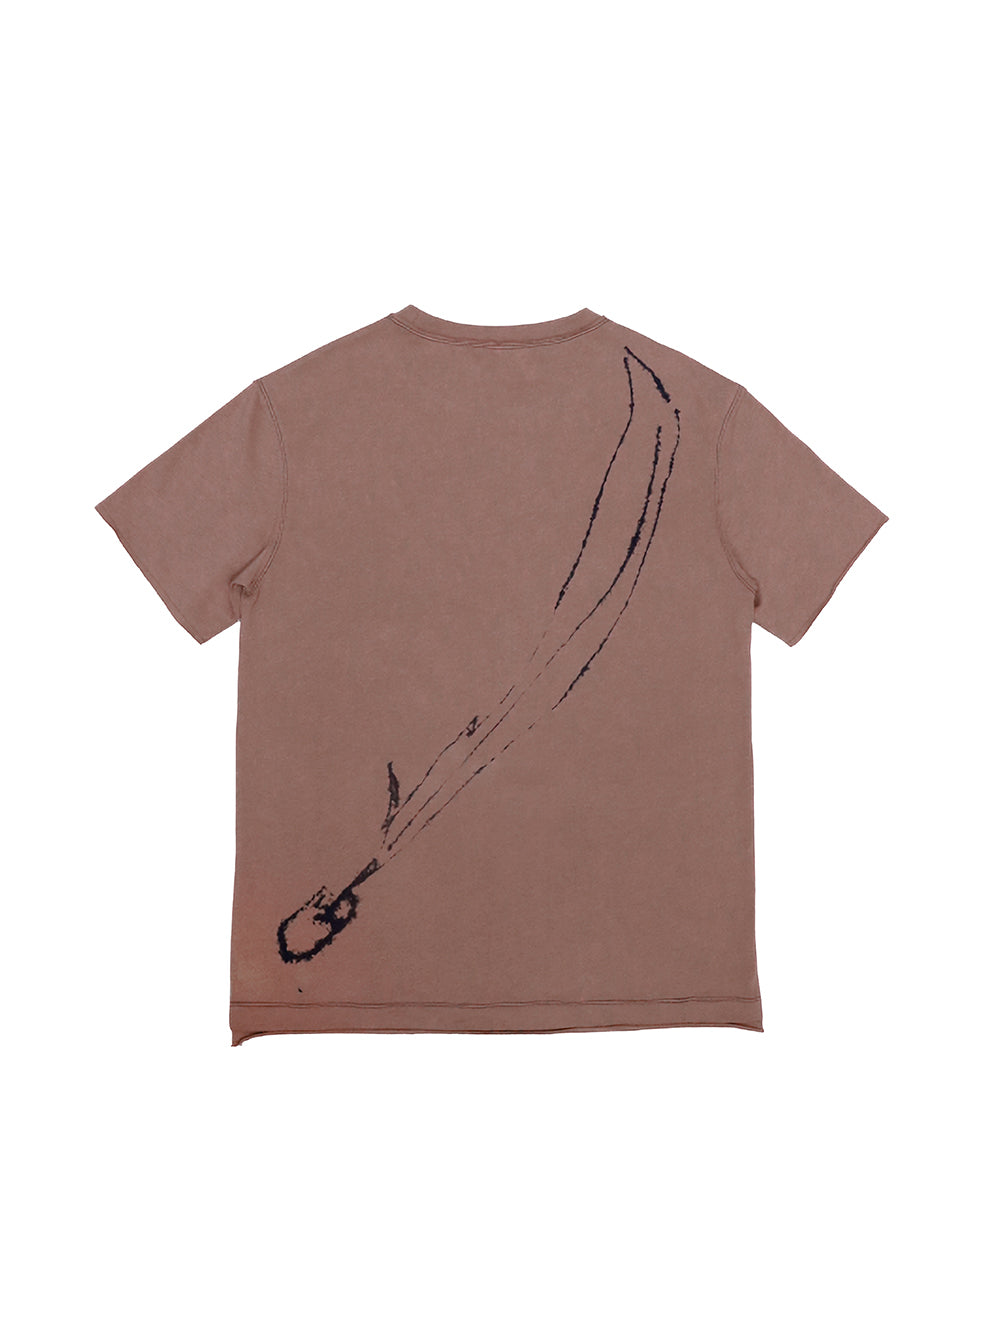 MUKTANK X COOLOTHES Smeared Bird Bean Paste Smeared Bird Single Print Brown Cotton T-Shirt